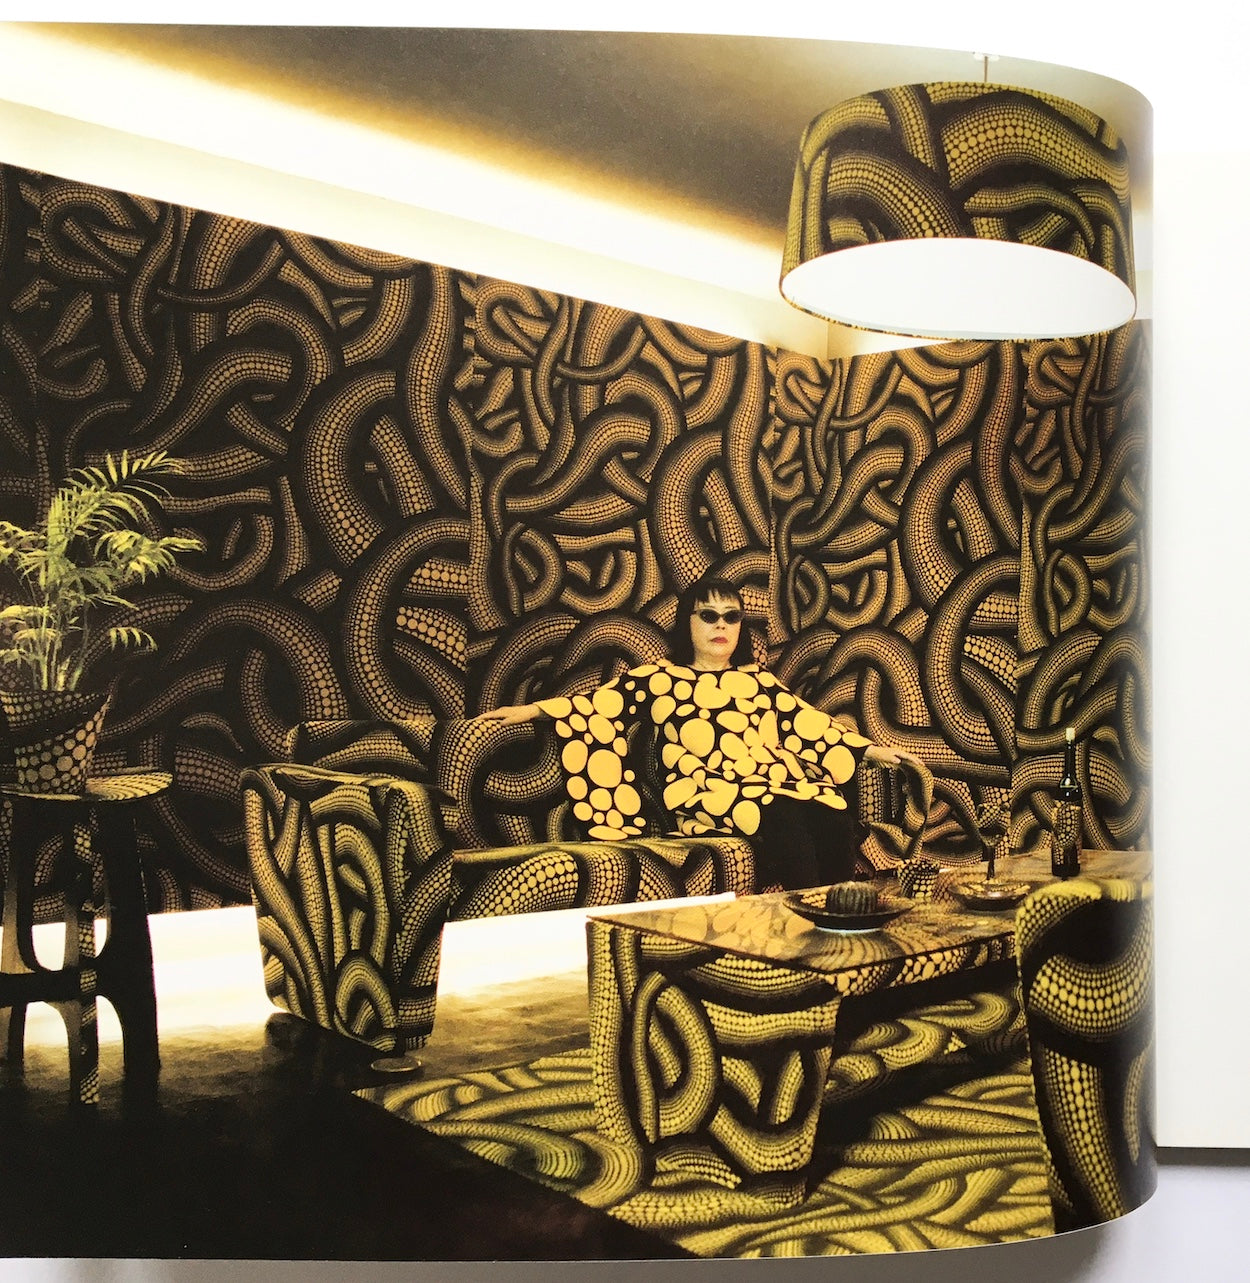 Yayoi Kusama furniture by graf:decorative mode no.3